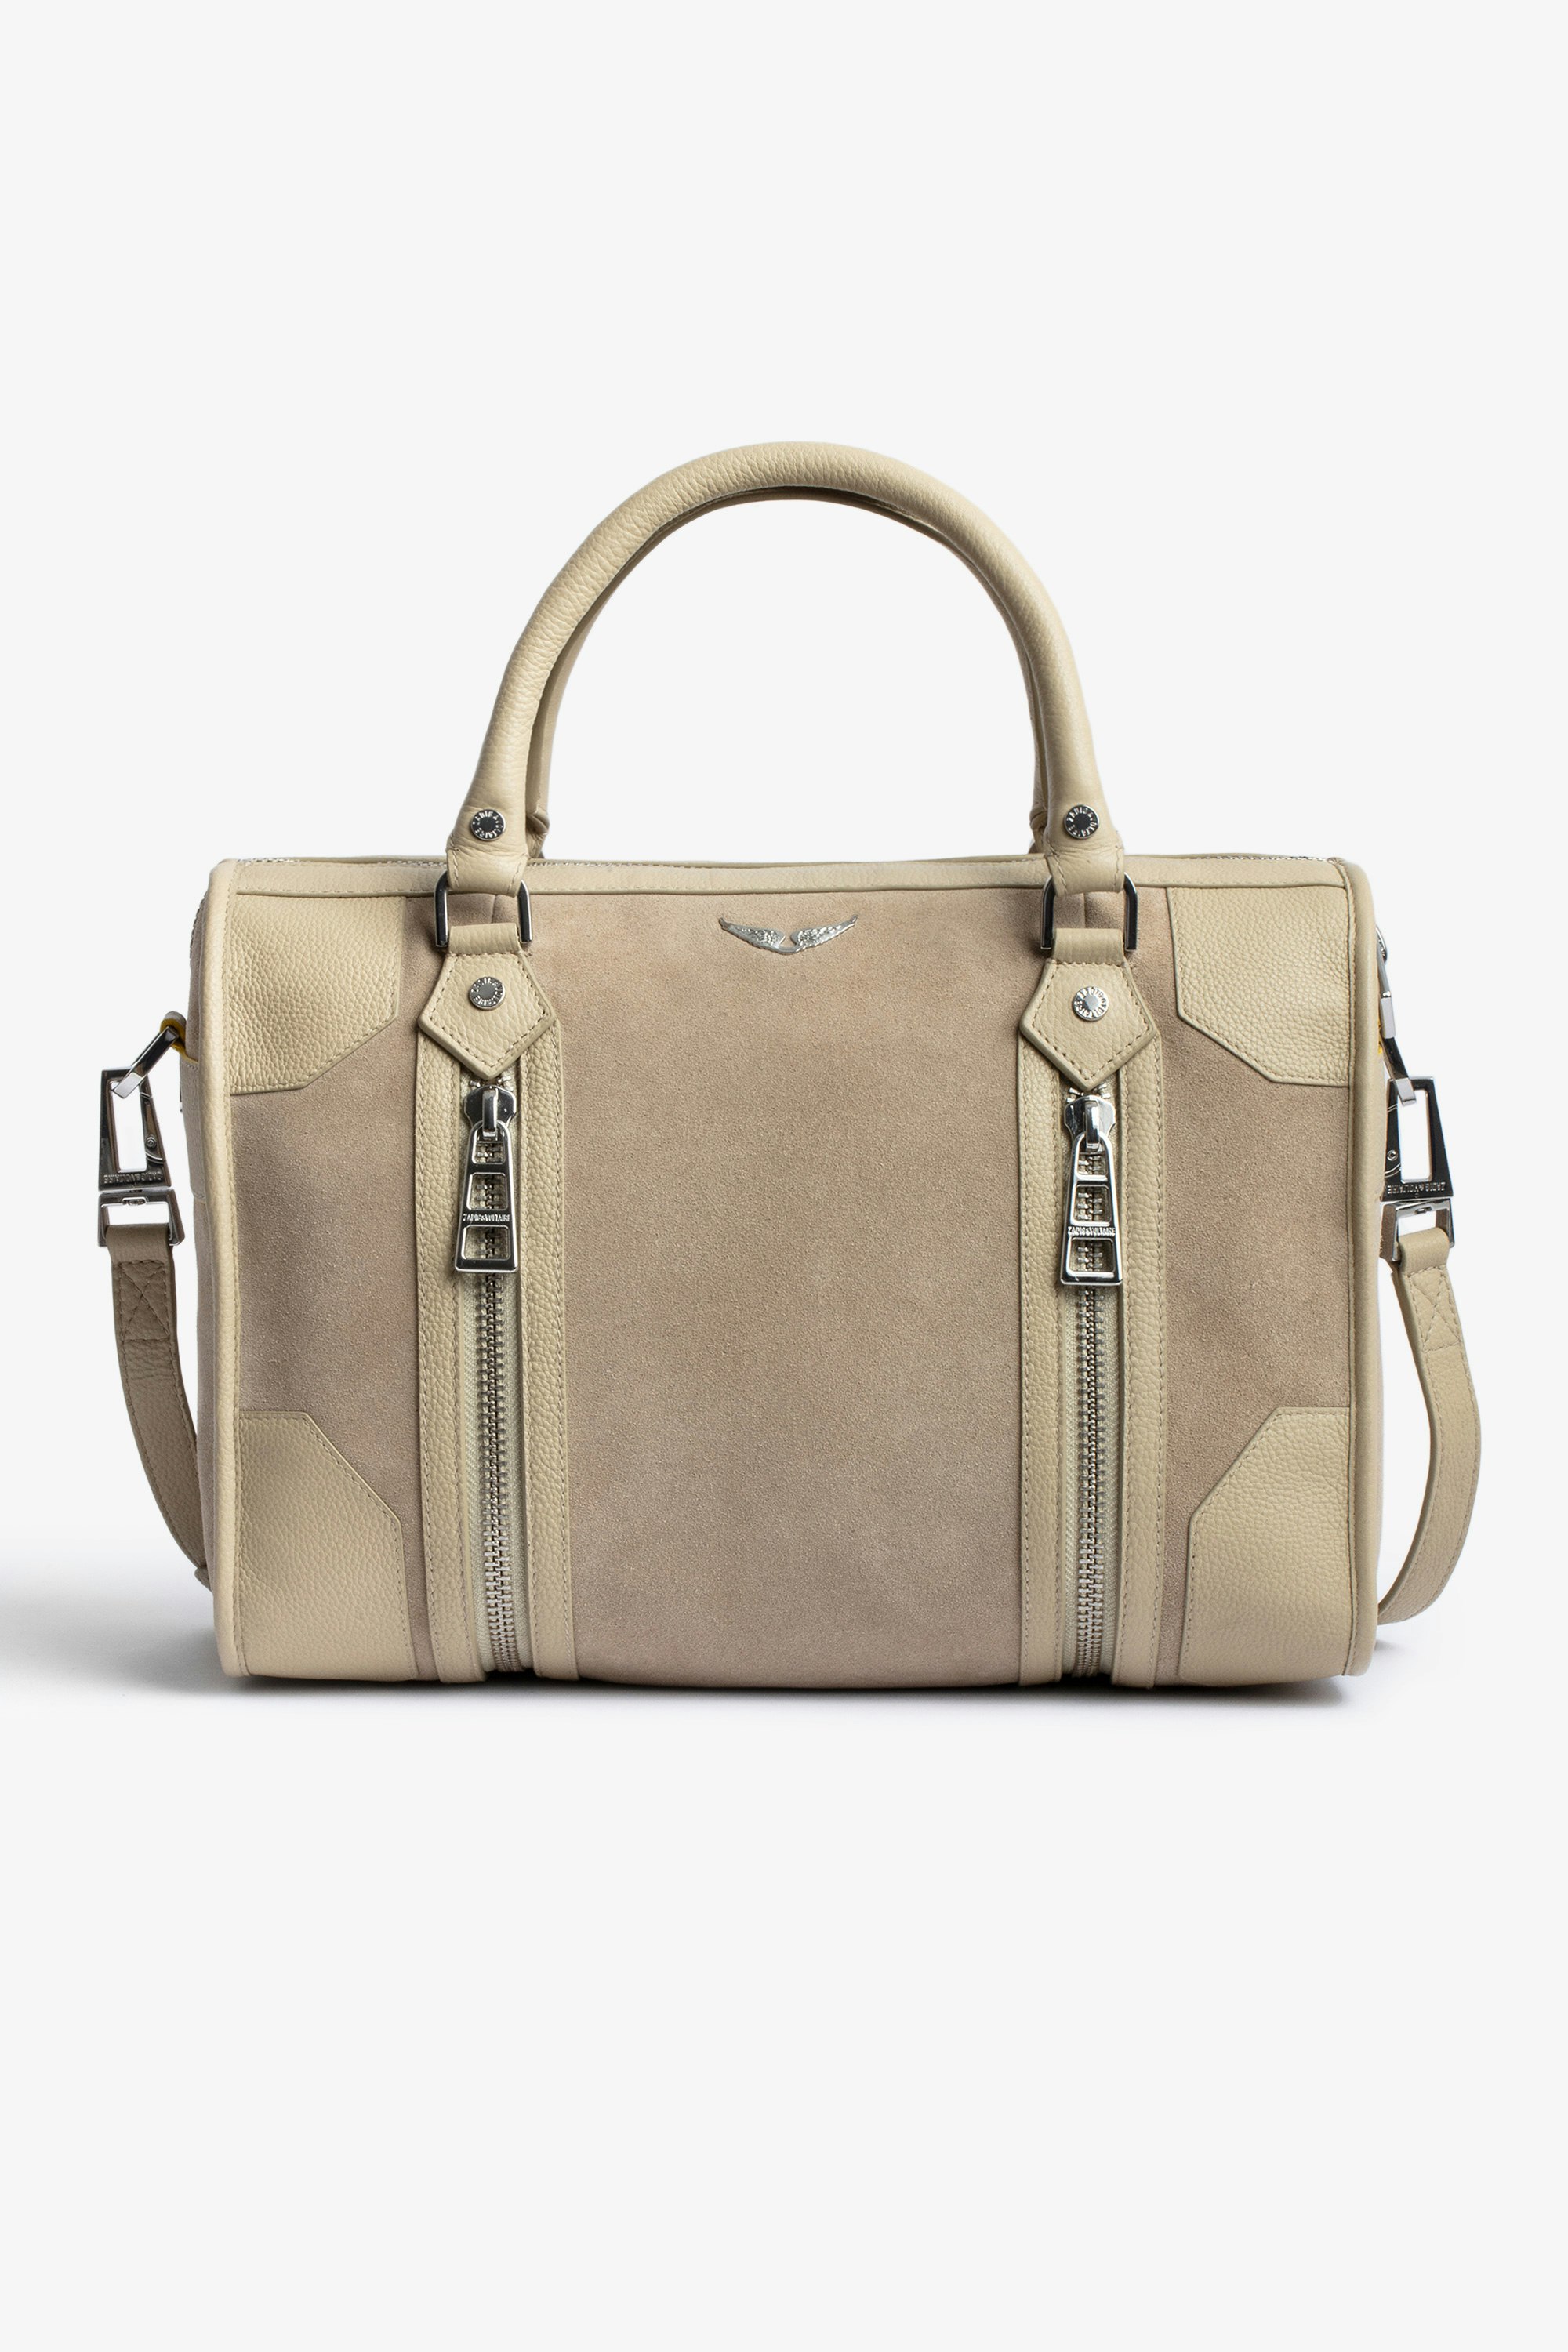 Sunny Medium #2 バッグ Women’s medium zipped bag in beige suede with a shoulder strap